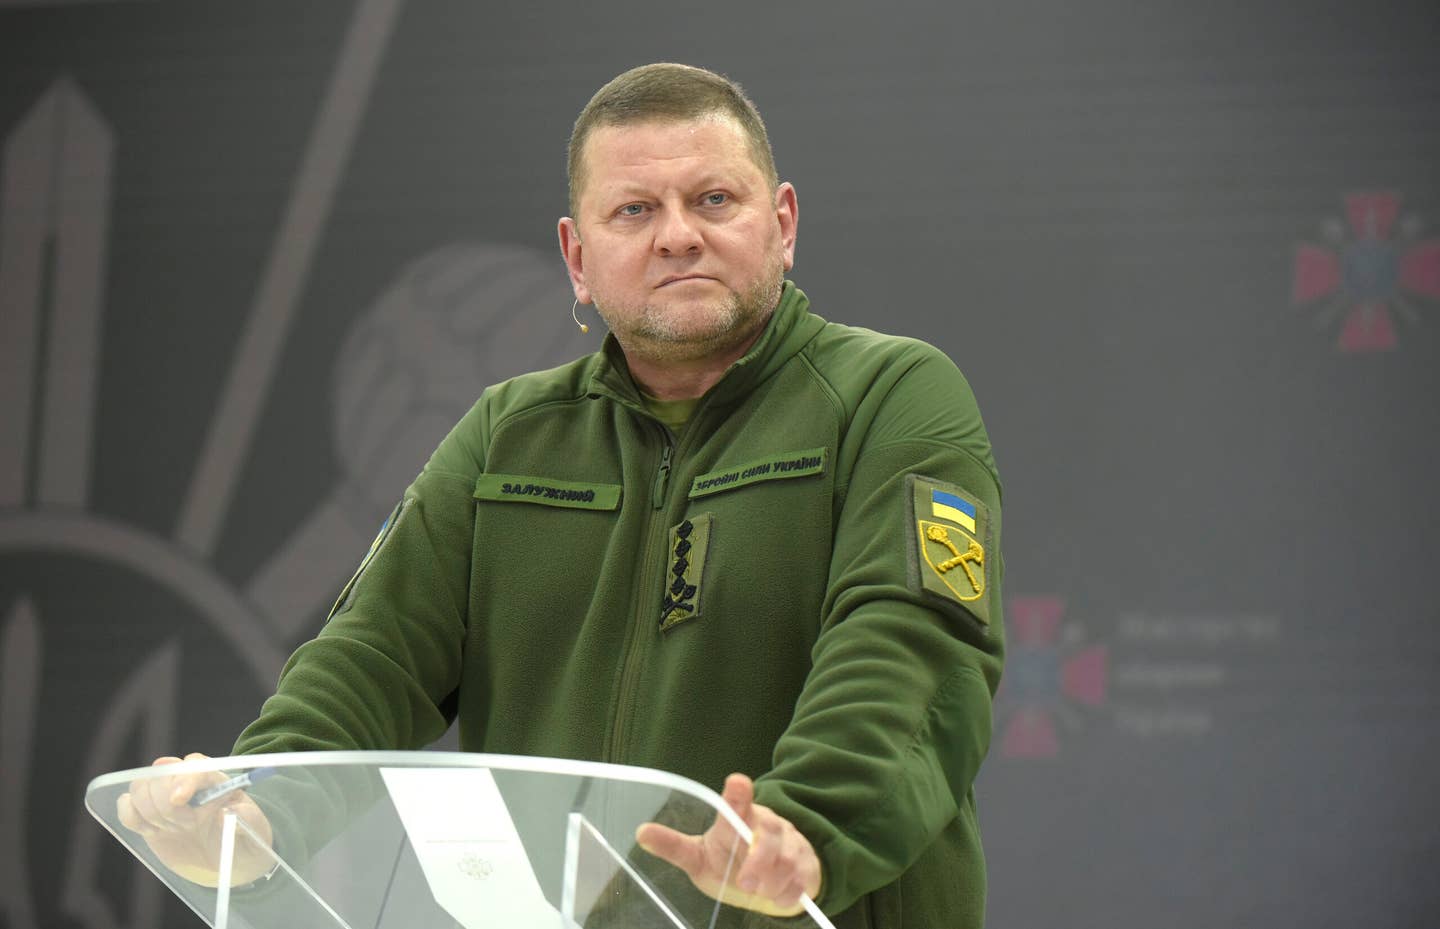 Commander-in-chief of the Armed Forces of Ukraine, Gen. Valerii Zaluzhnyi. <em>Kaniuka Ruslan/Ukrinform/Future Publishing via Getty Images</em>